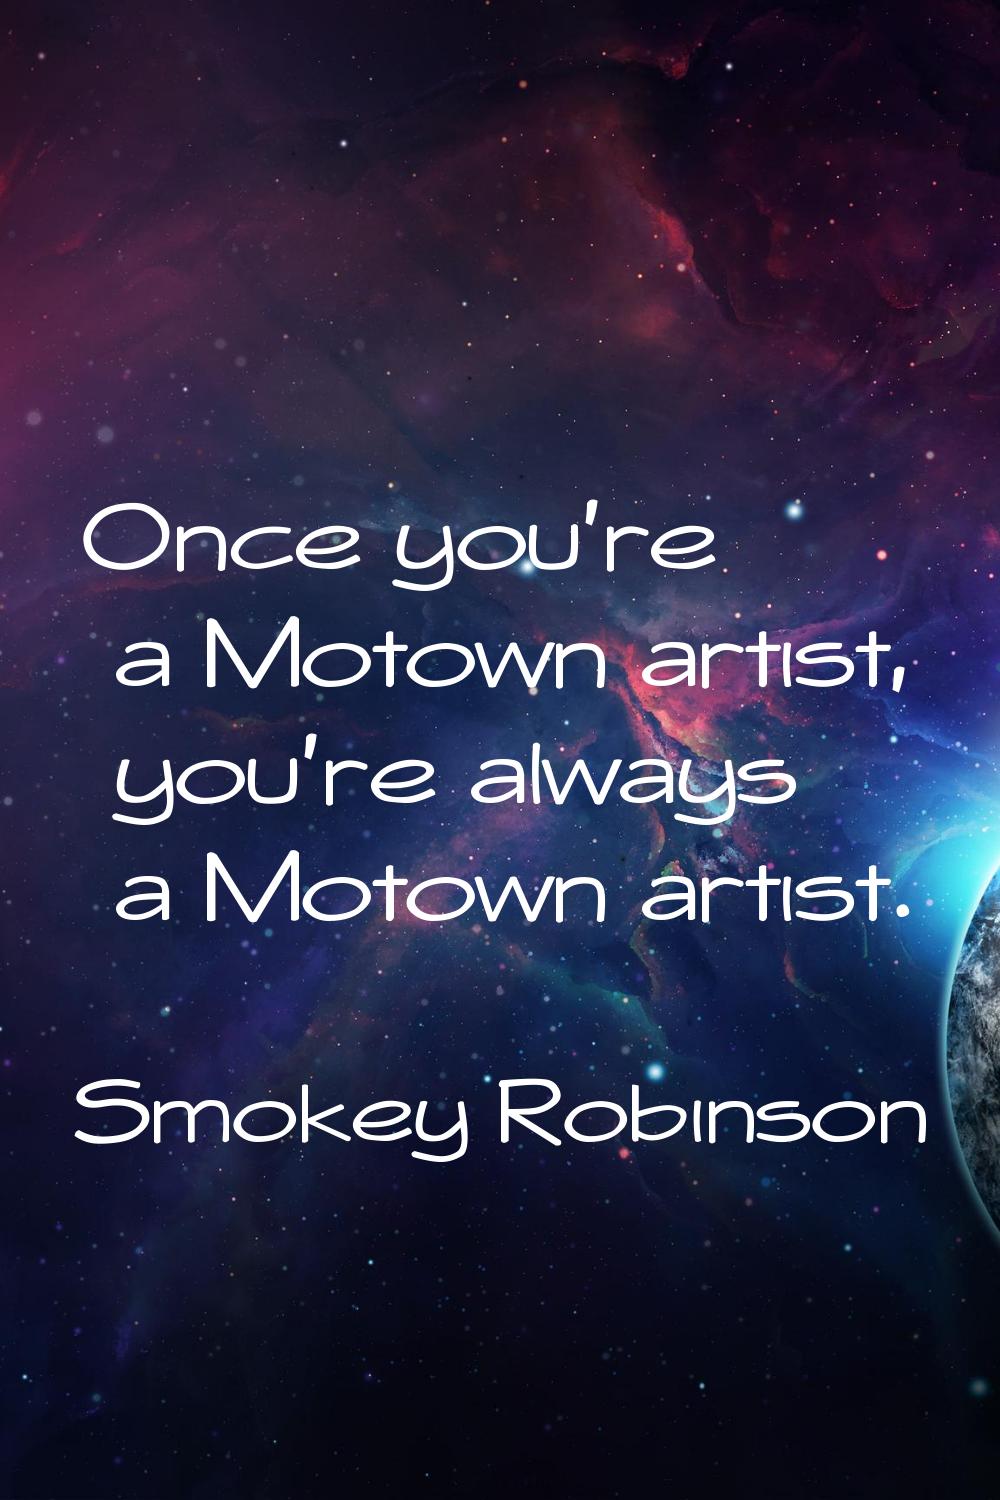 Once you're a Motown artist, you're always a Motown artist.